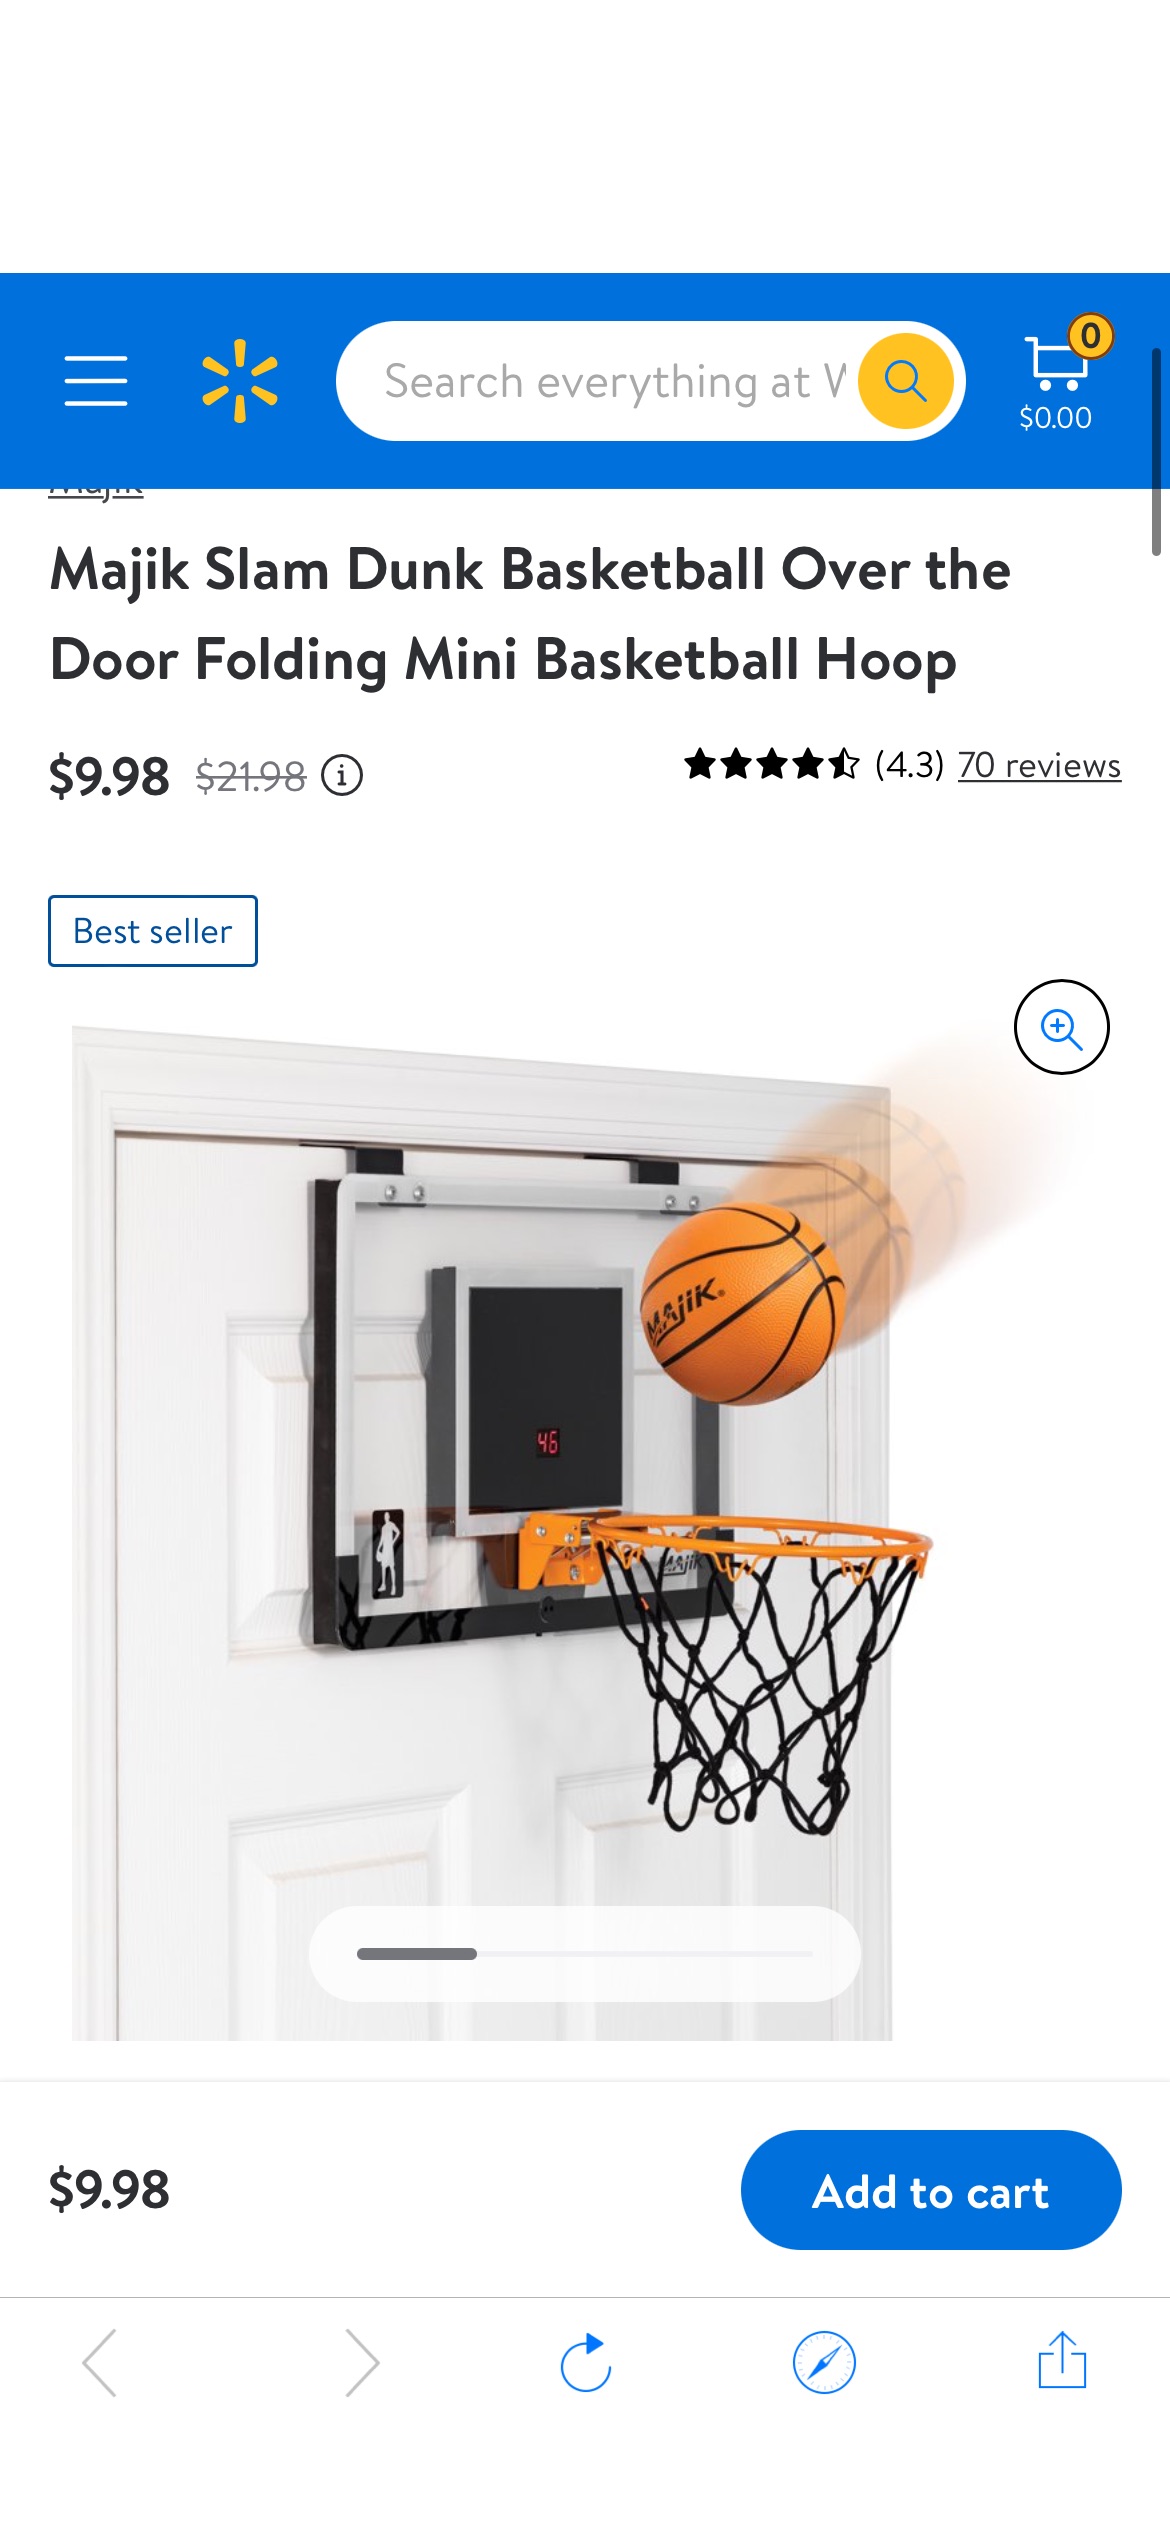 Majik Slam Dunk Basketball Over the Door Folding Mini Basketball Hoop 篮球架